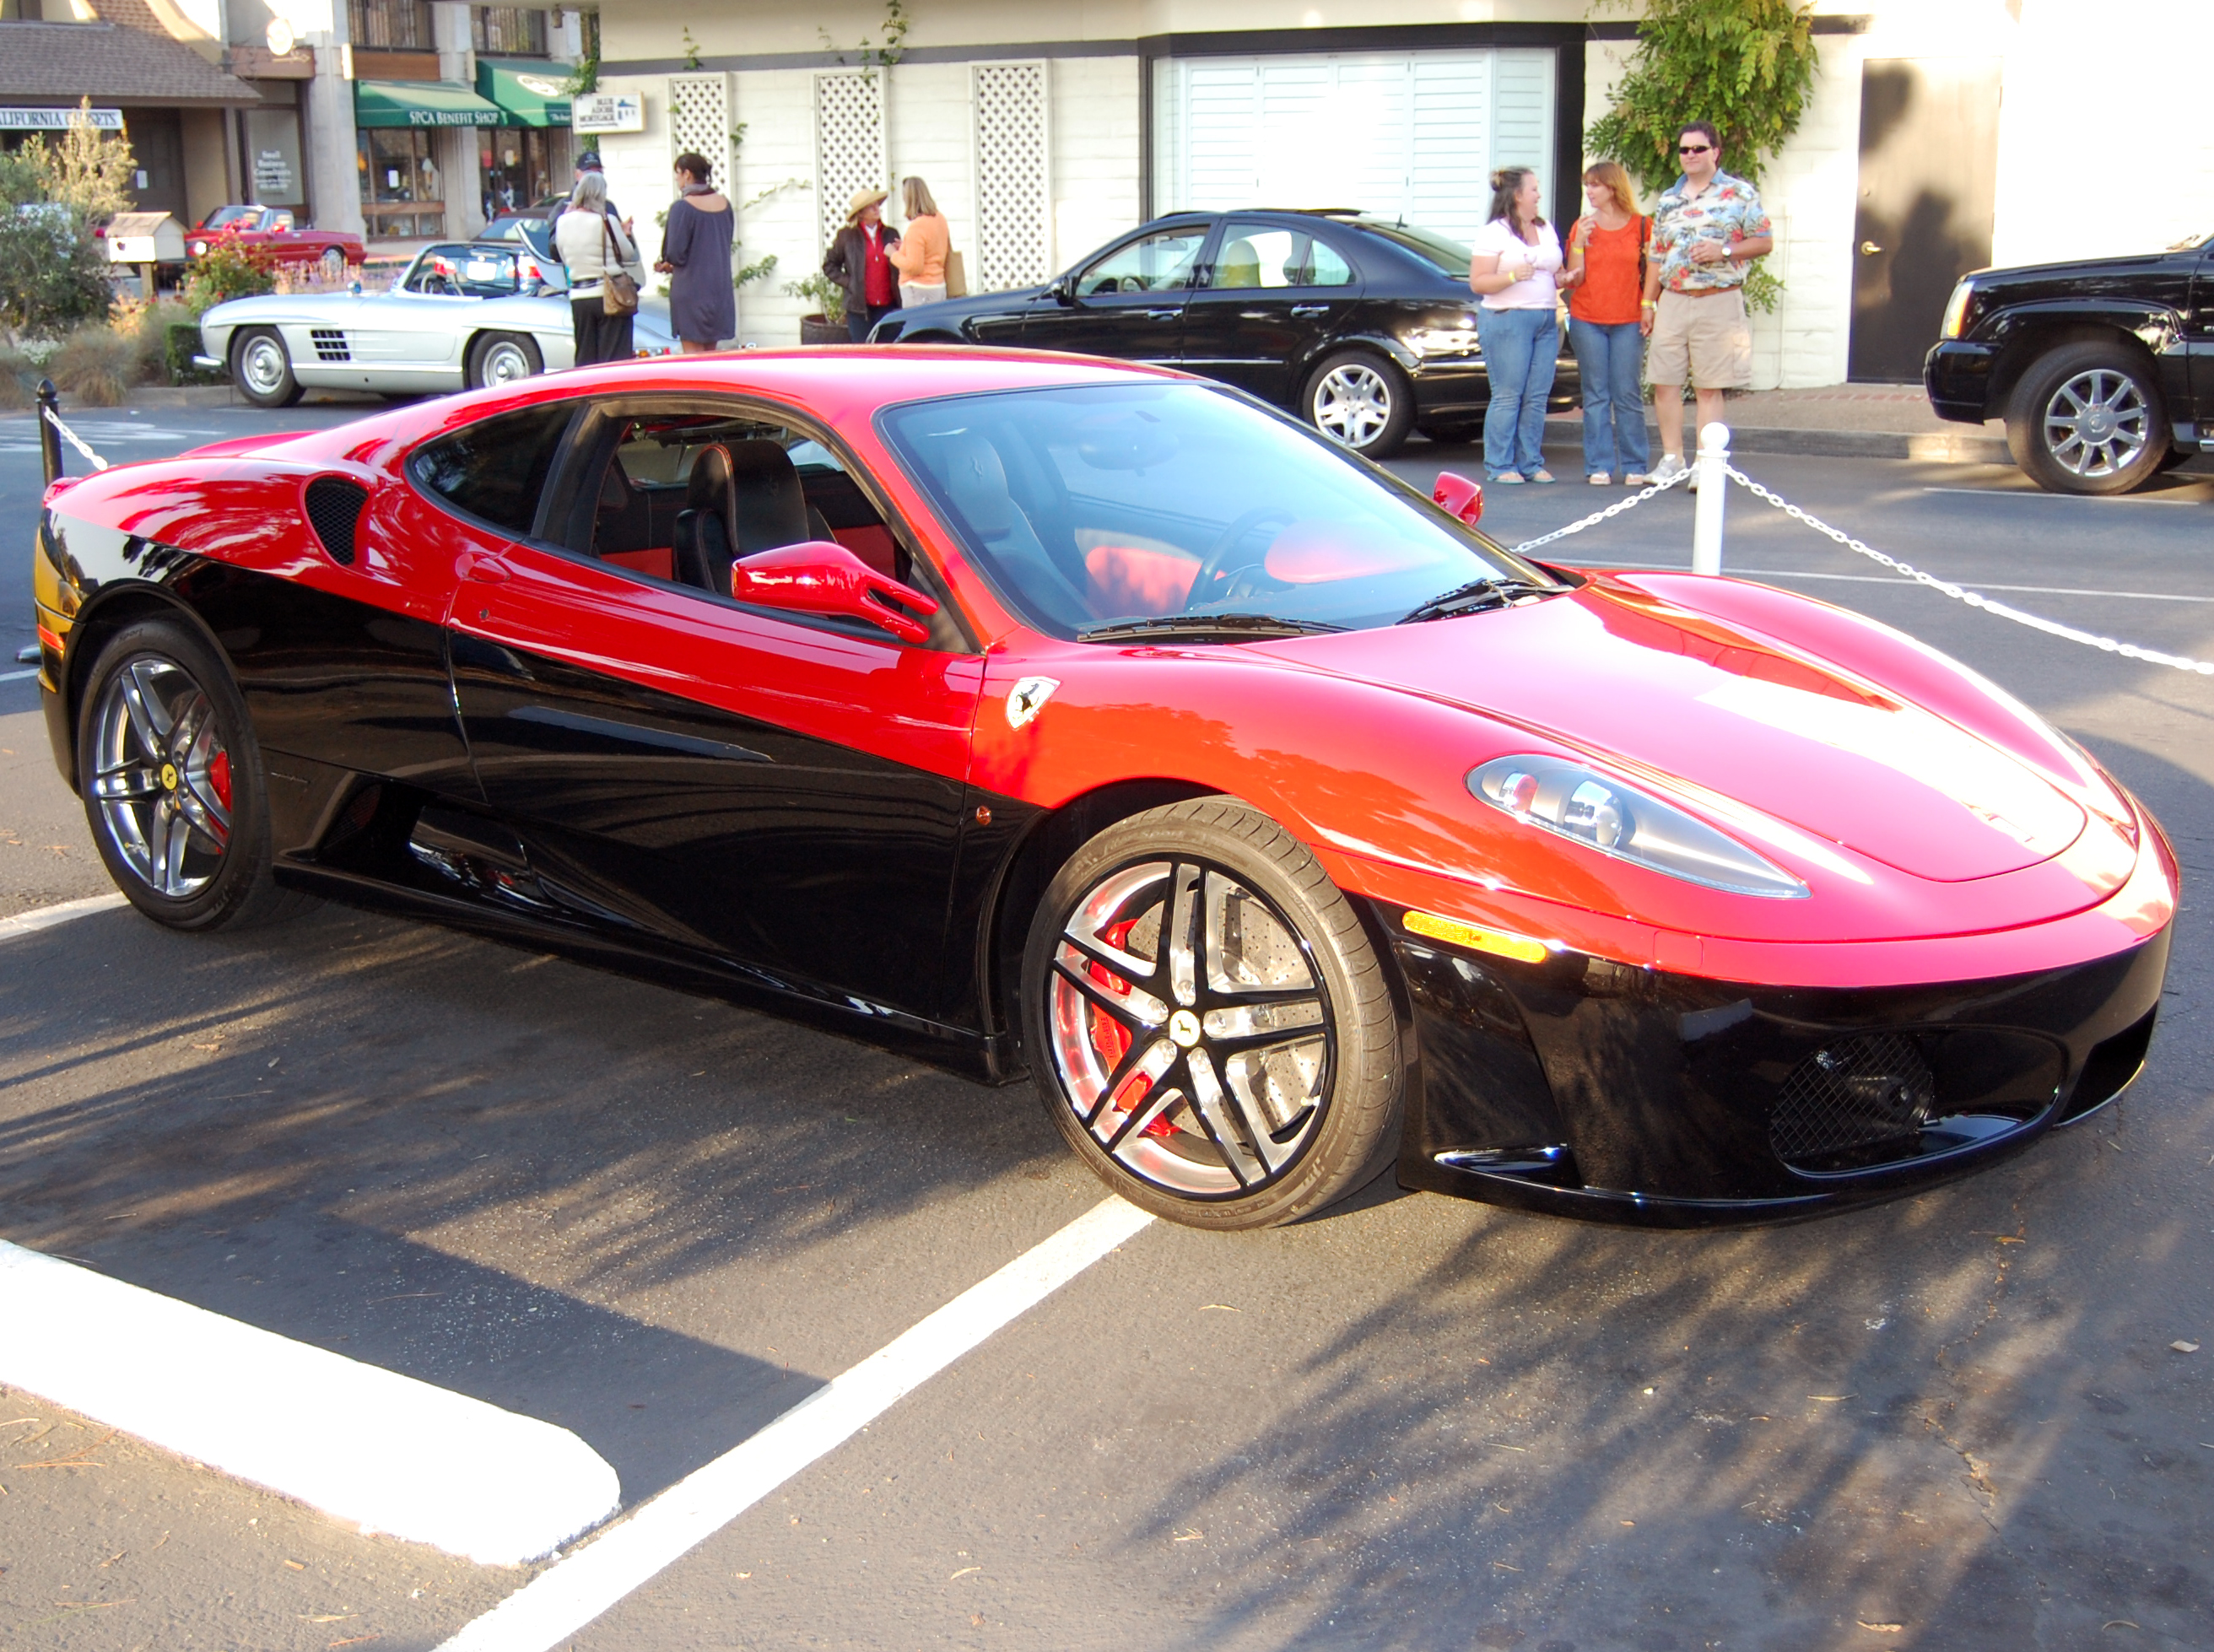 Ferrari_F430_red_black_2_tone_by_Partywave.jpg